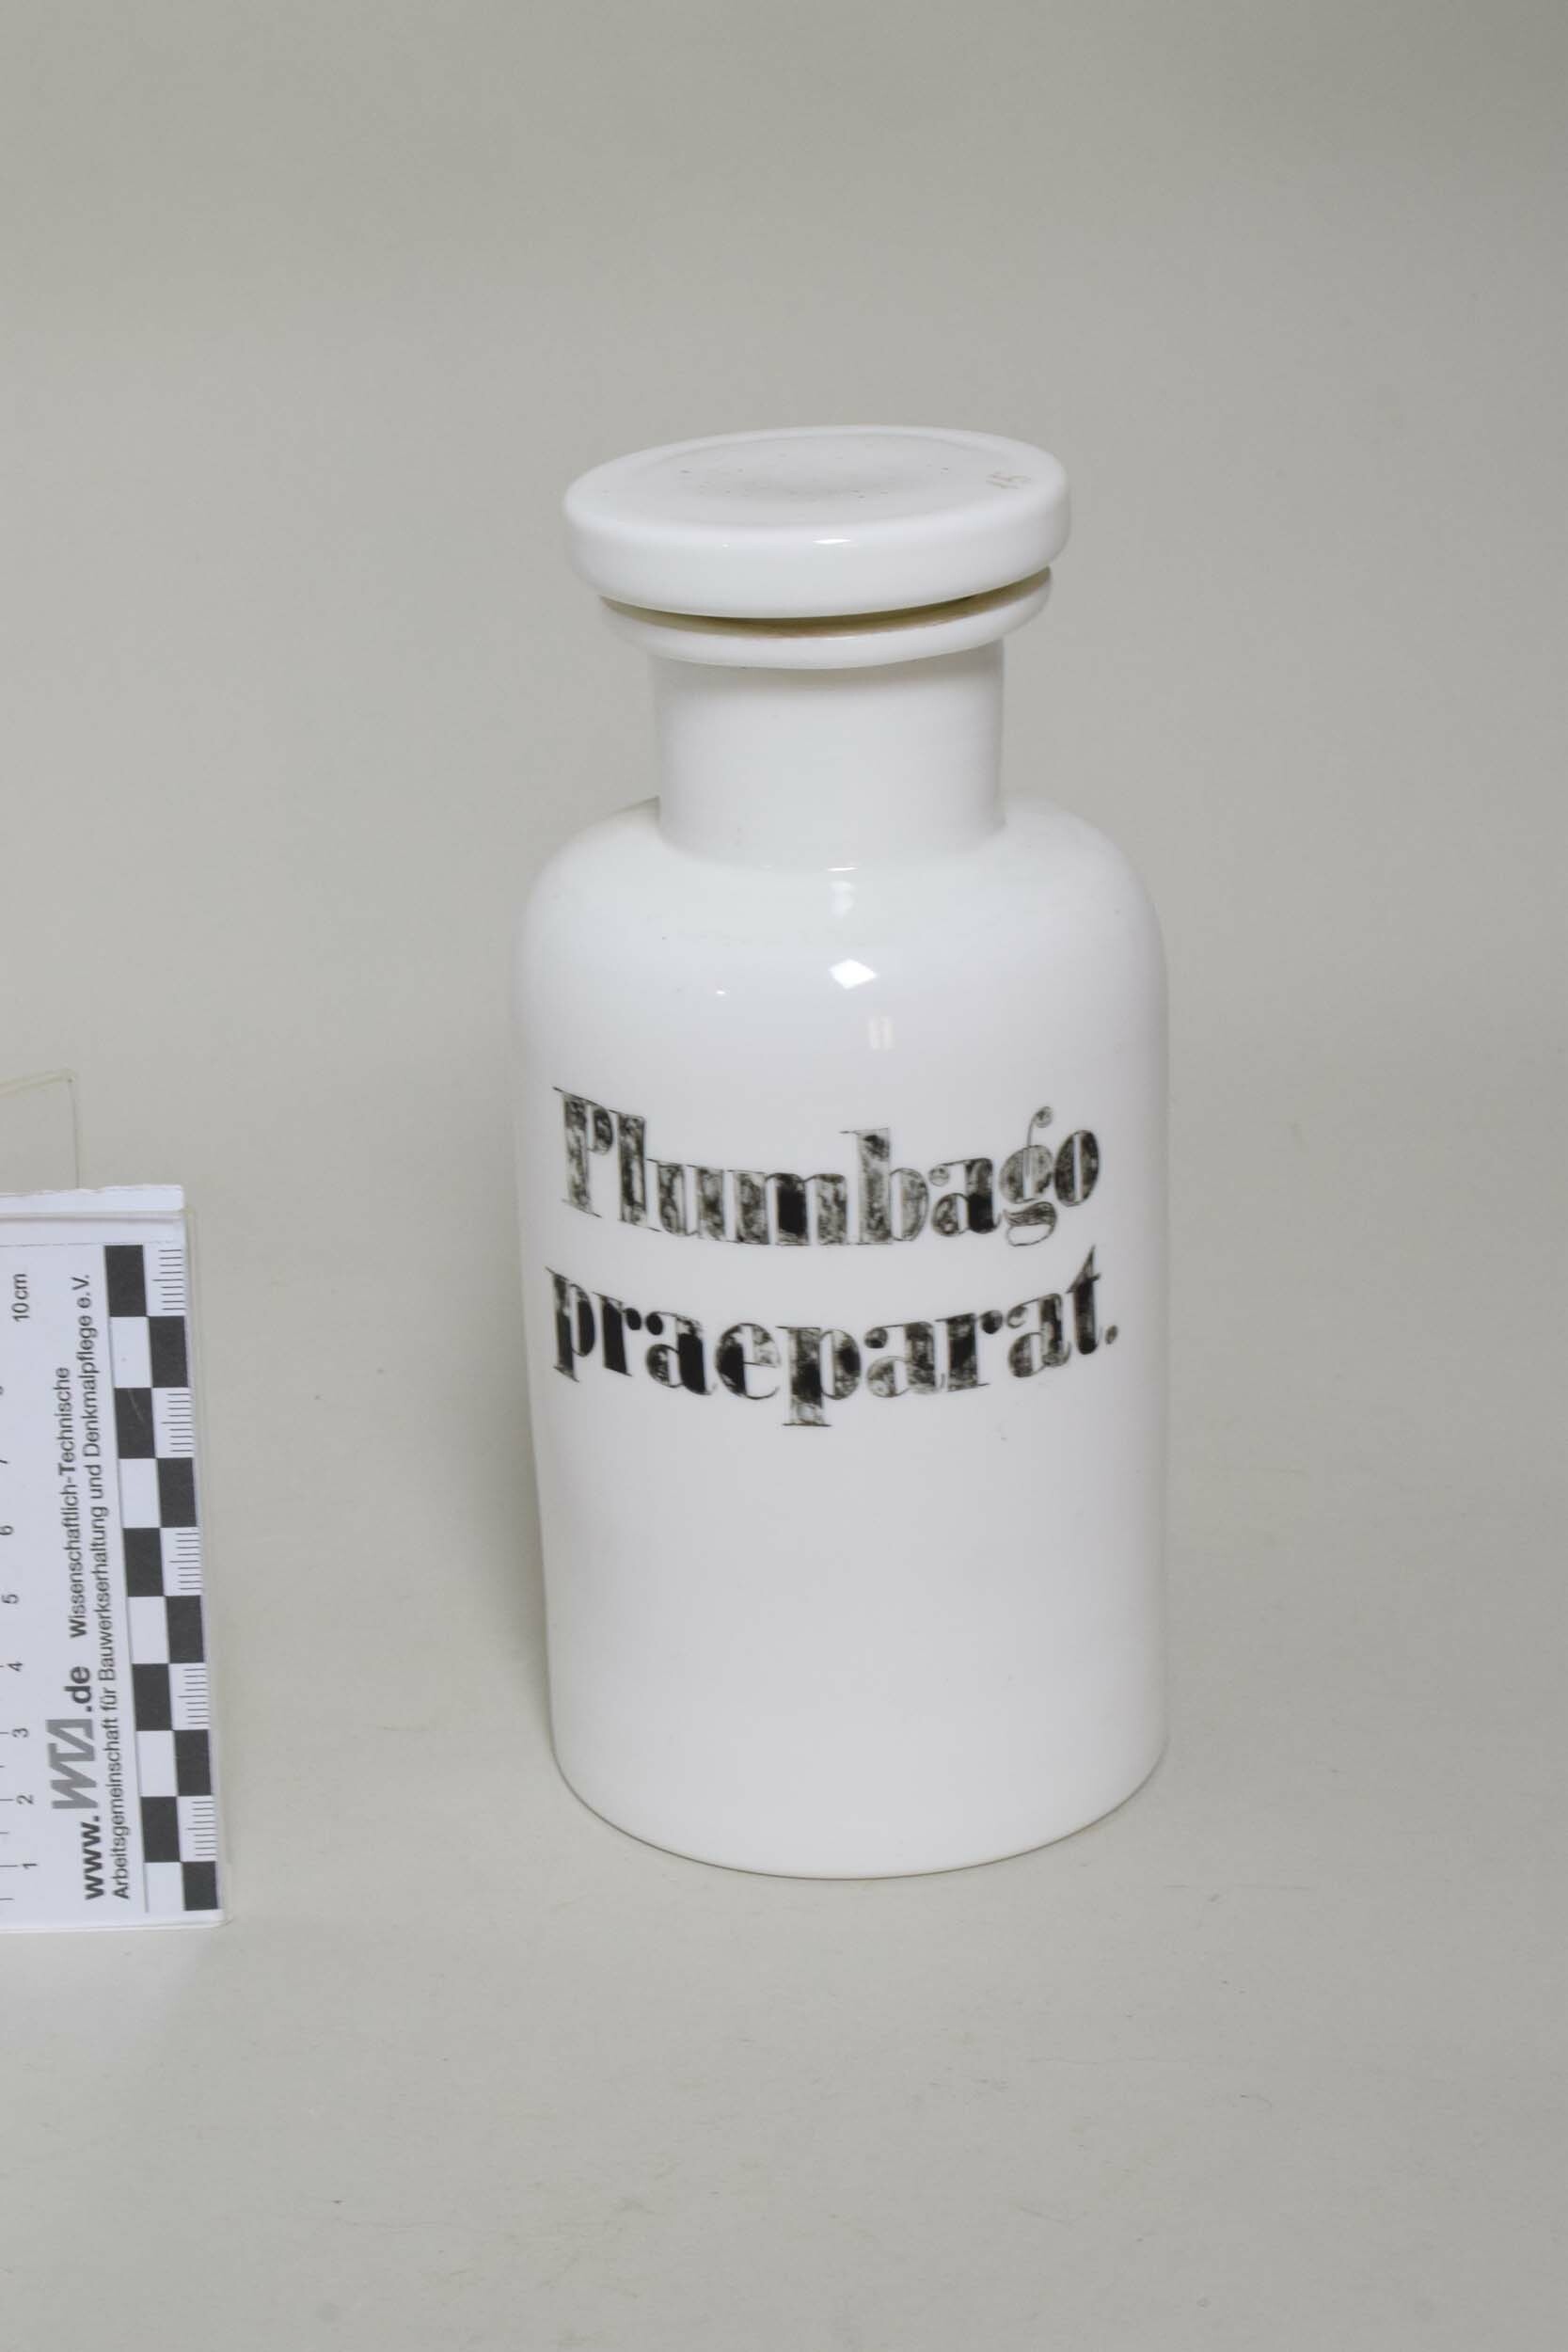 Apothekenflasche "Plumbago praepara" (Bleipräparat) (Heimatmuseum Dohna CC BY-NC-SA)